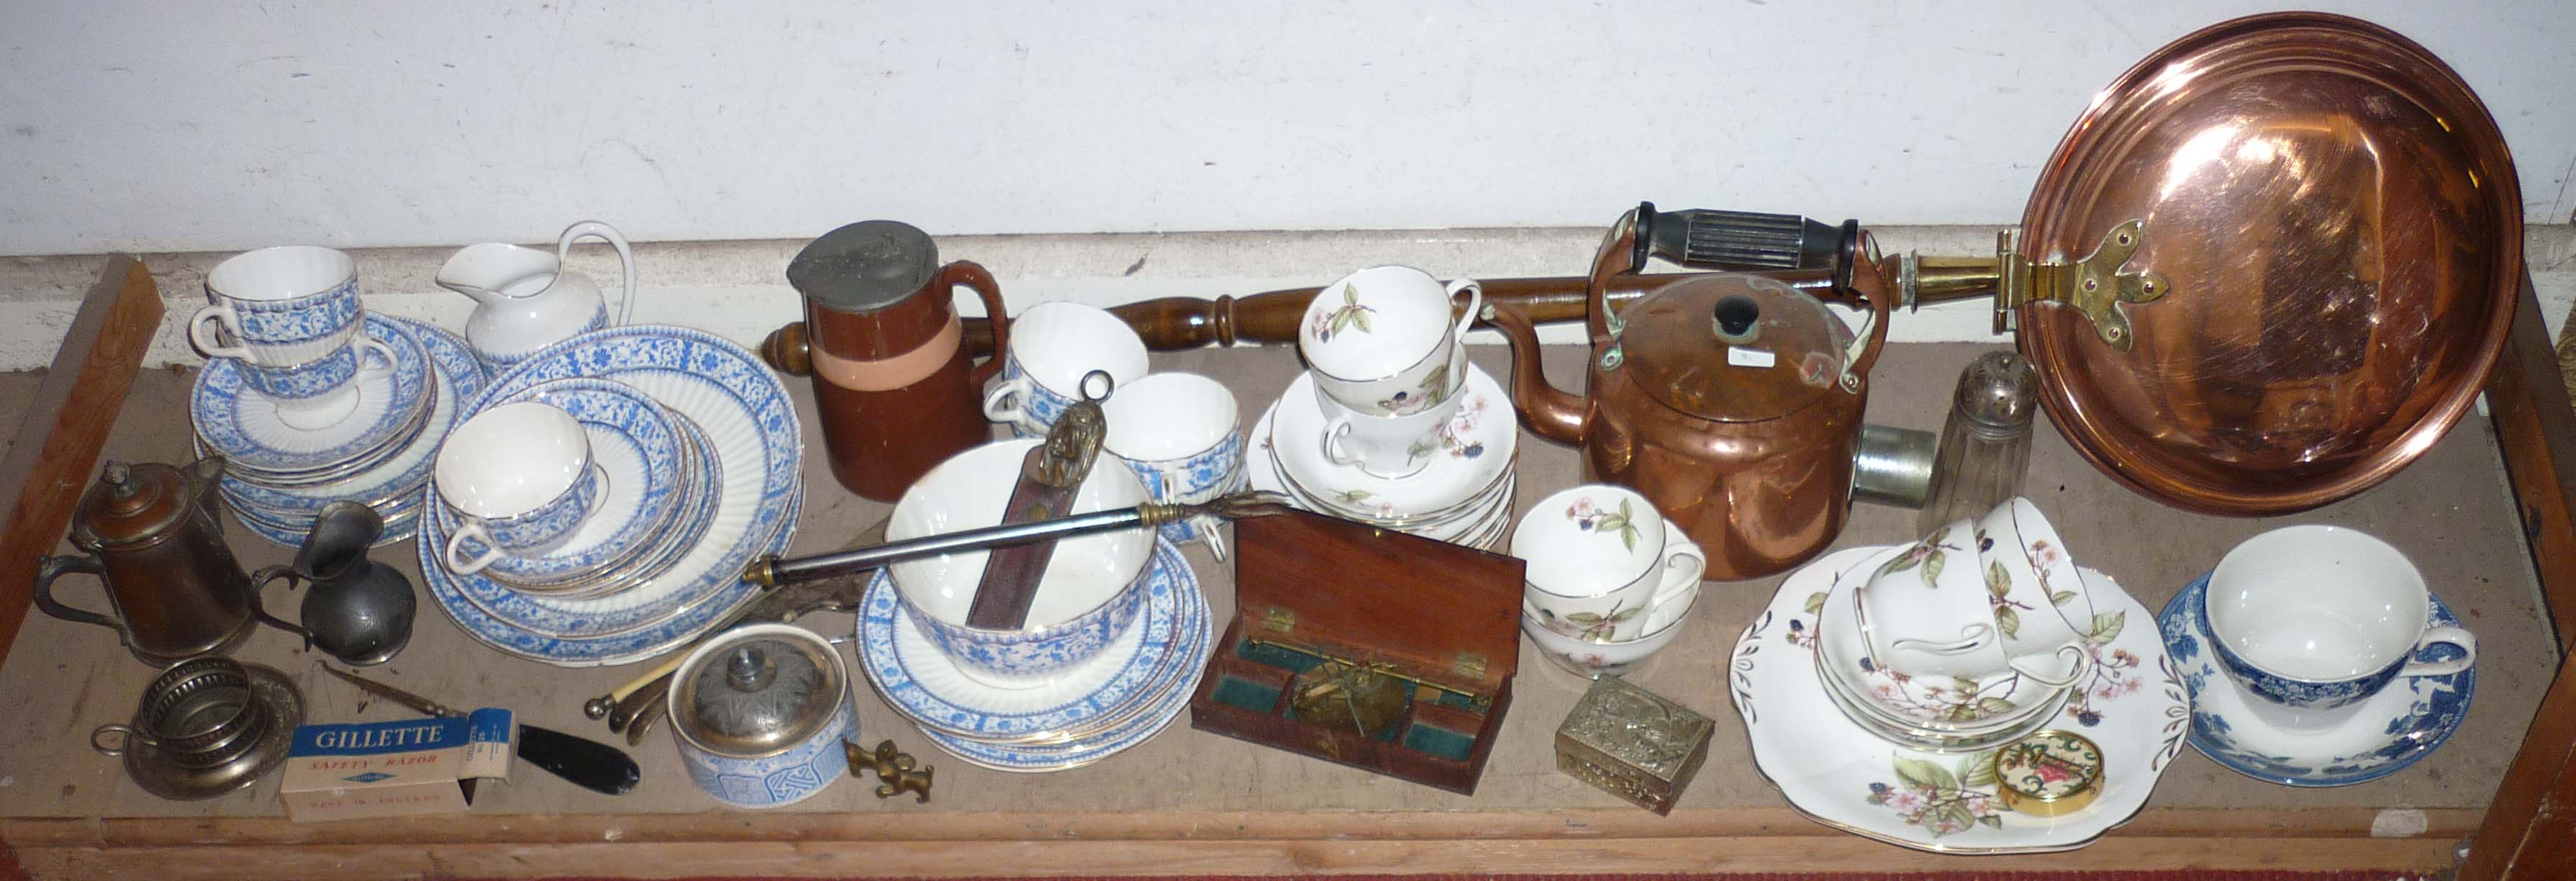 Effects; postal scales, Adderley Bramble part tea service, copper bed pan, kettle, Victorian blue/